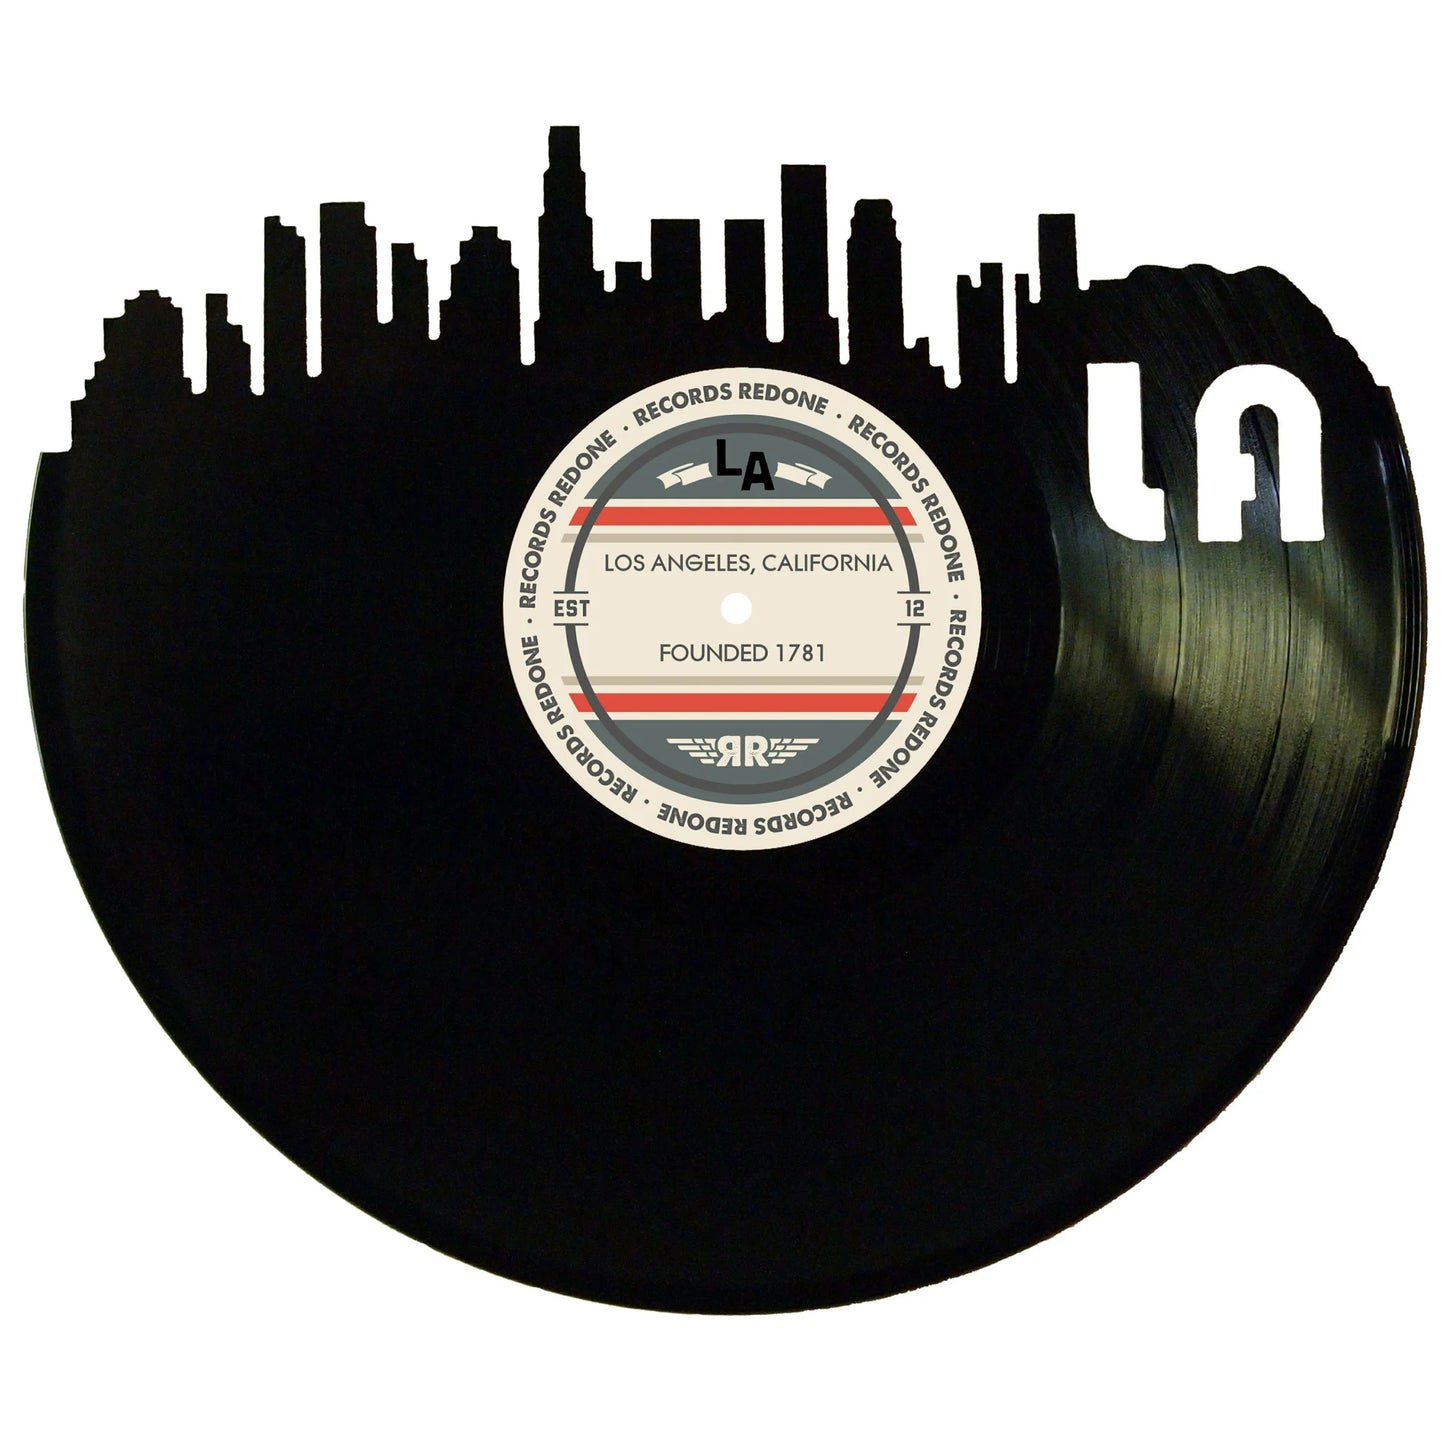 Los Angeles Skyline Records Redone Label Vinyl Record Art